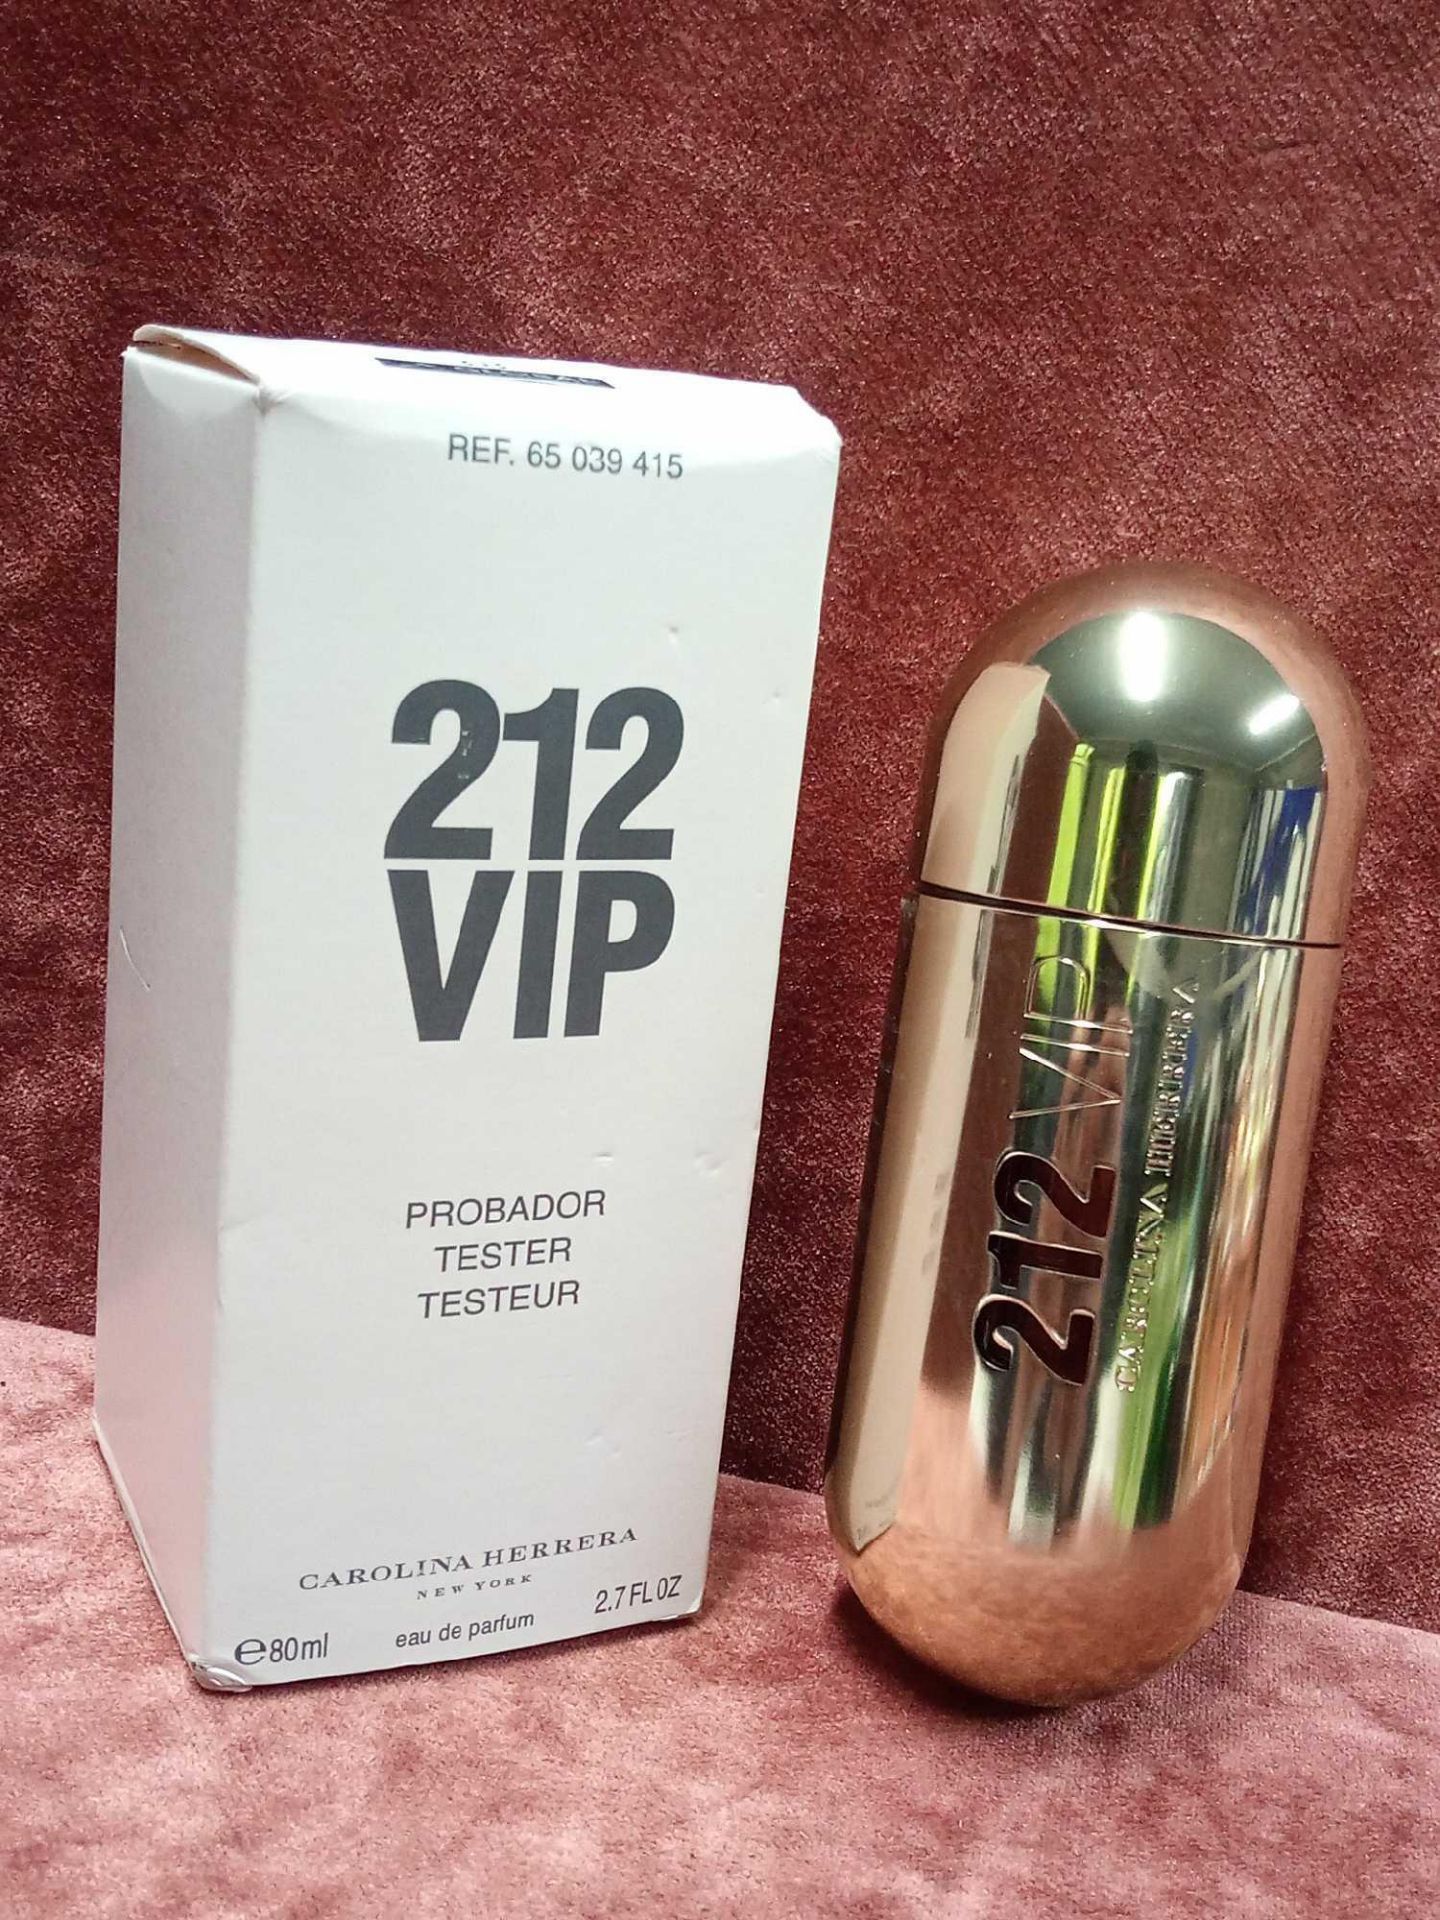 RRP £70 Unboxed 80Ml Tester Bottle Of Carolina Herrera 212 Vip Eau De Parfum Spray - Image 2 of 2